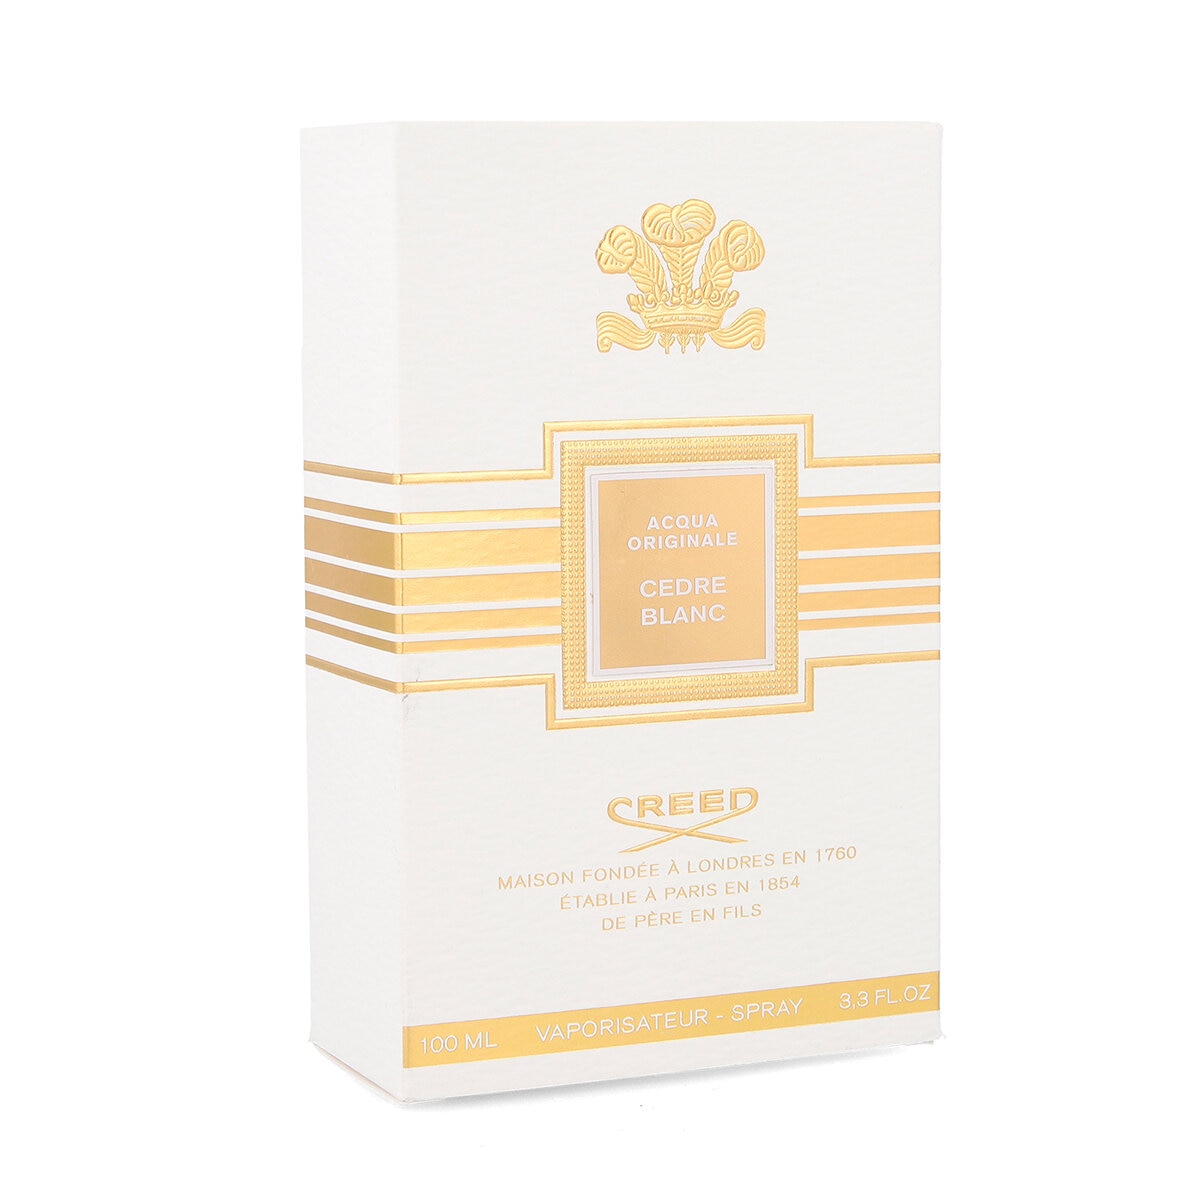 Creed Acqua Originale Cedre Blanc 100 ml 